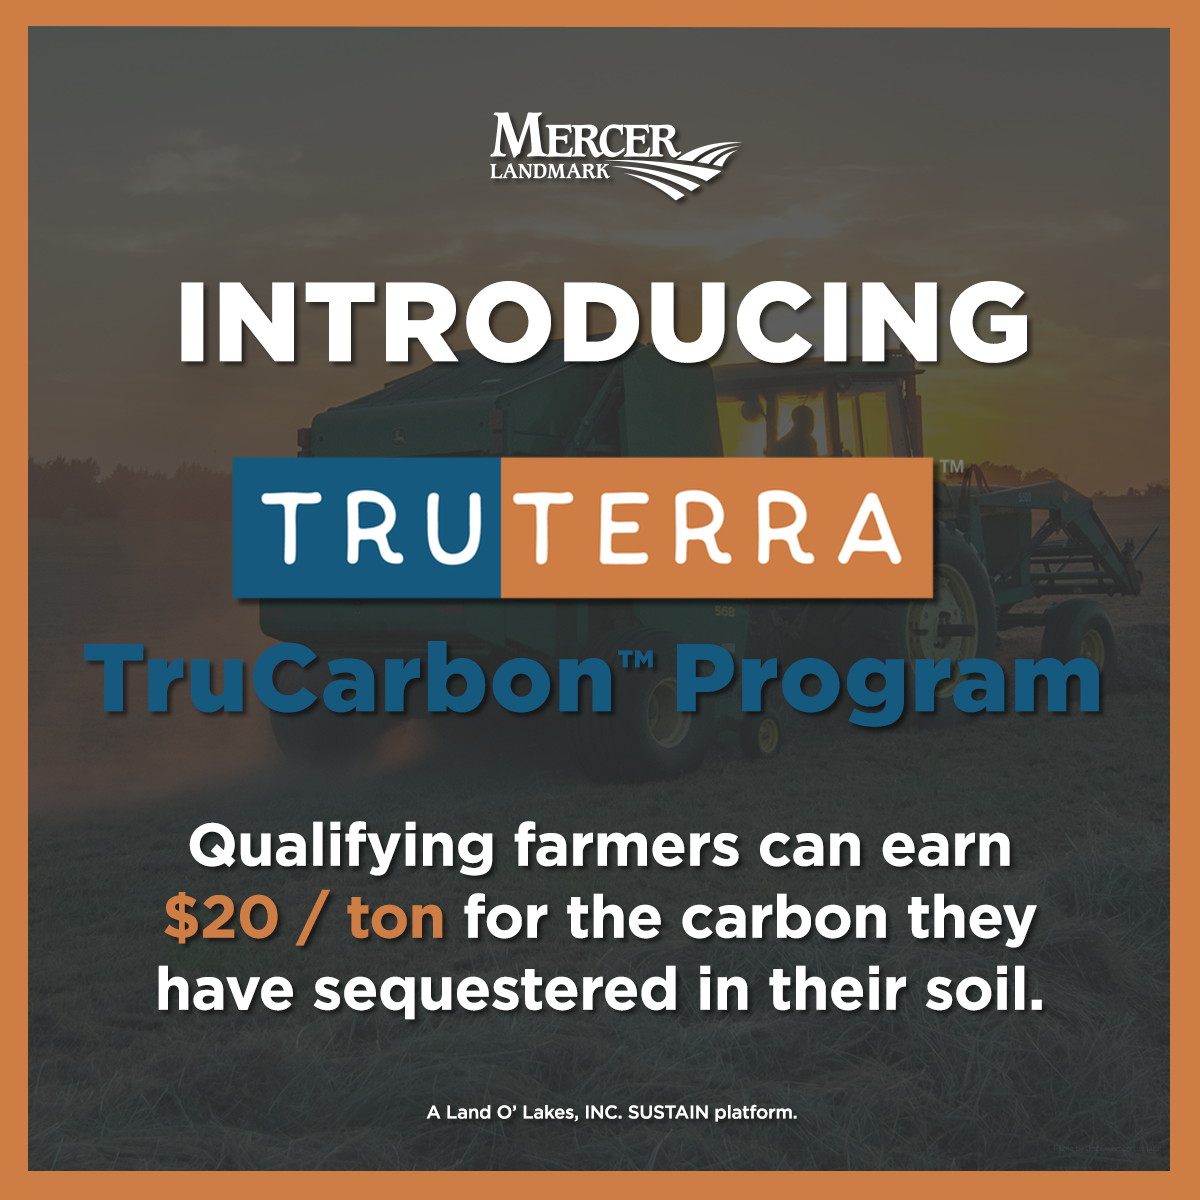 Introducing the NEW TruCarbon™ Program through Truterra